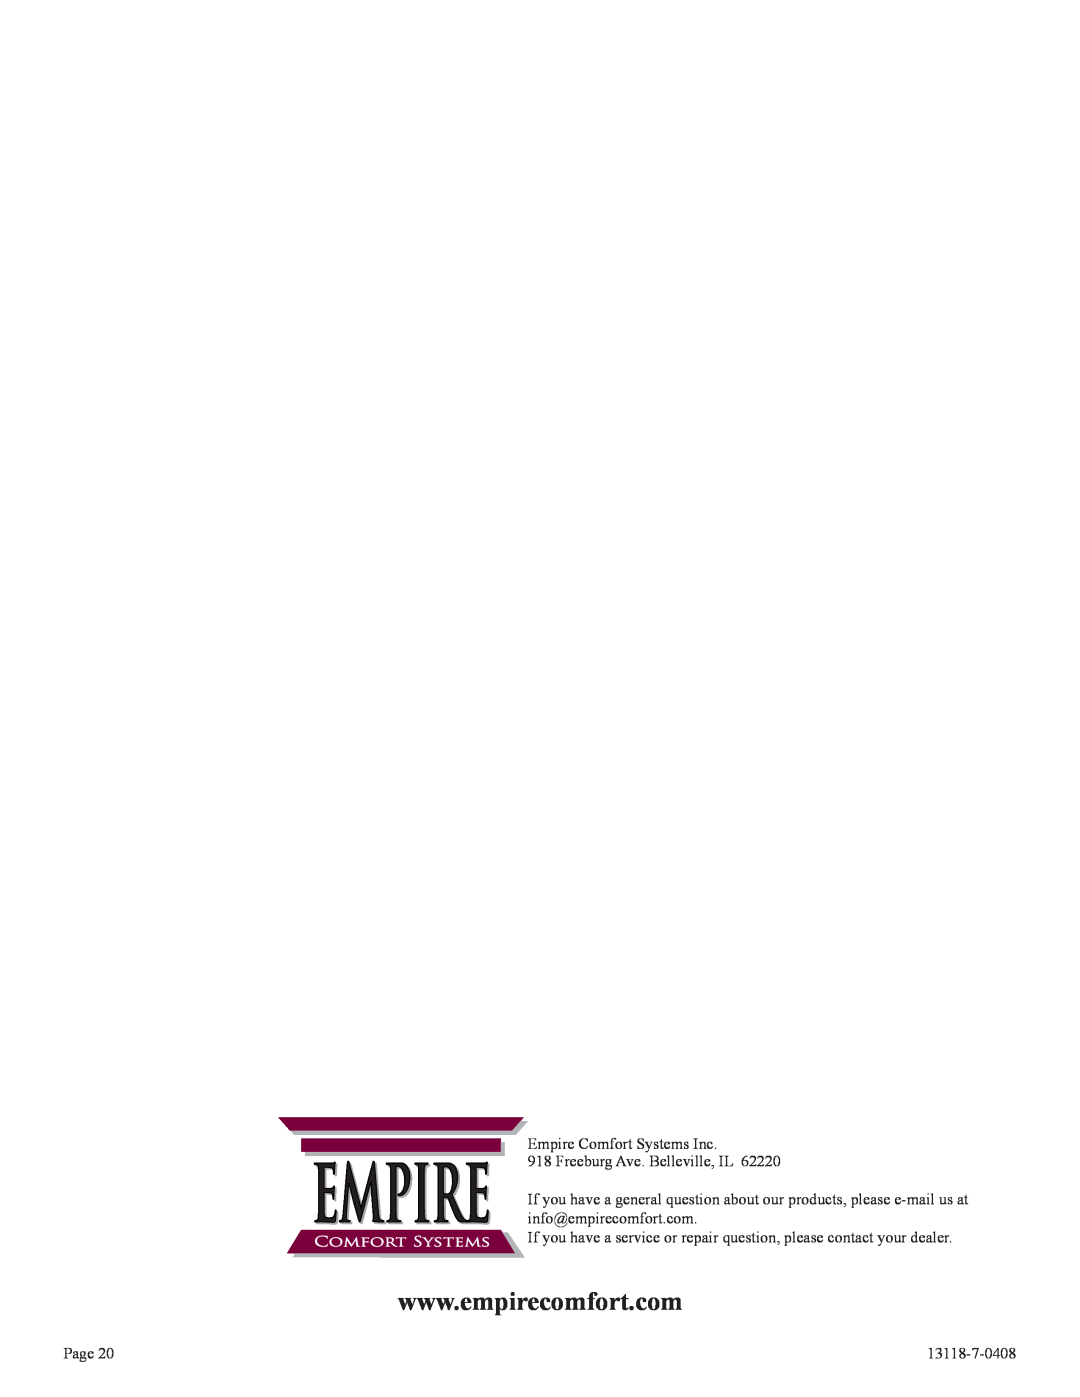 Empire Comfort Systems DV-55T-1 Empire Comfort Systems Inc, EMPIRE 918 Freeburg Ave. Belleville, IL, Page, 13118-7-0408 